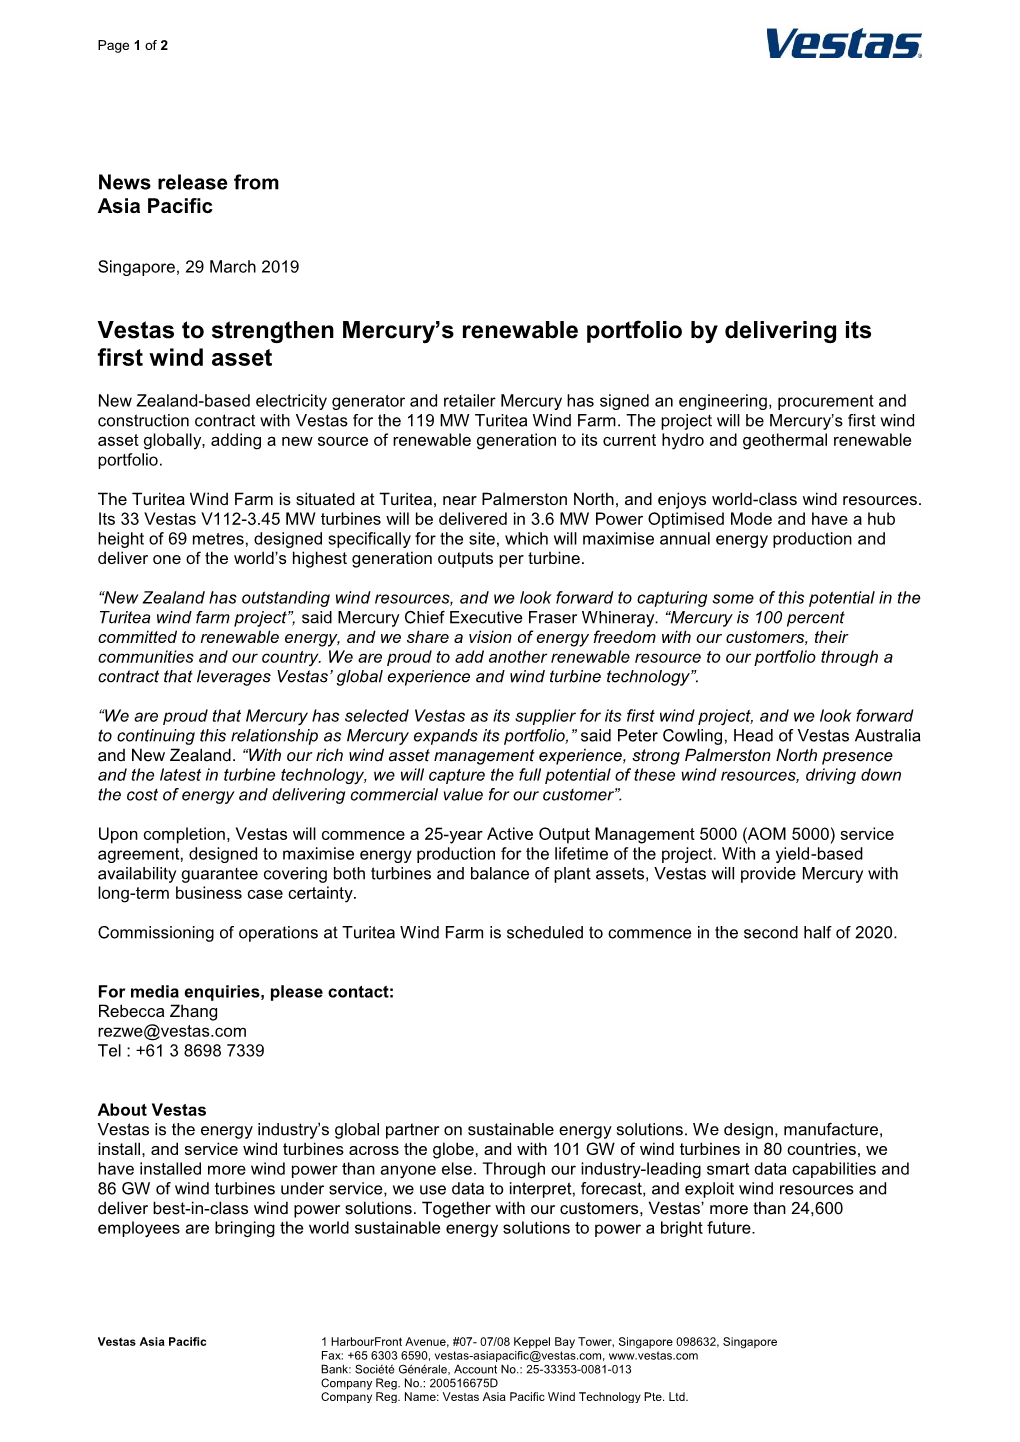 Vestas to Strengthen Mercury's Renewable Portfolio by Delivering Its